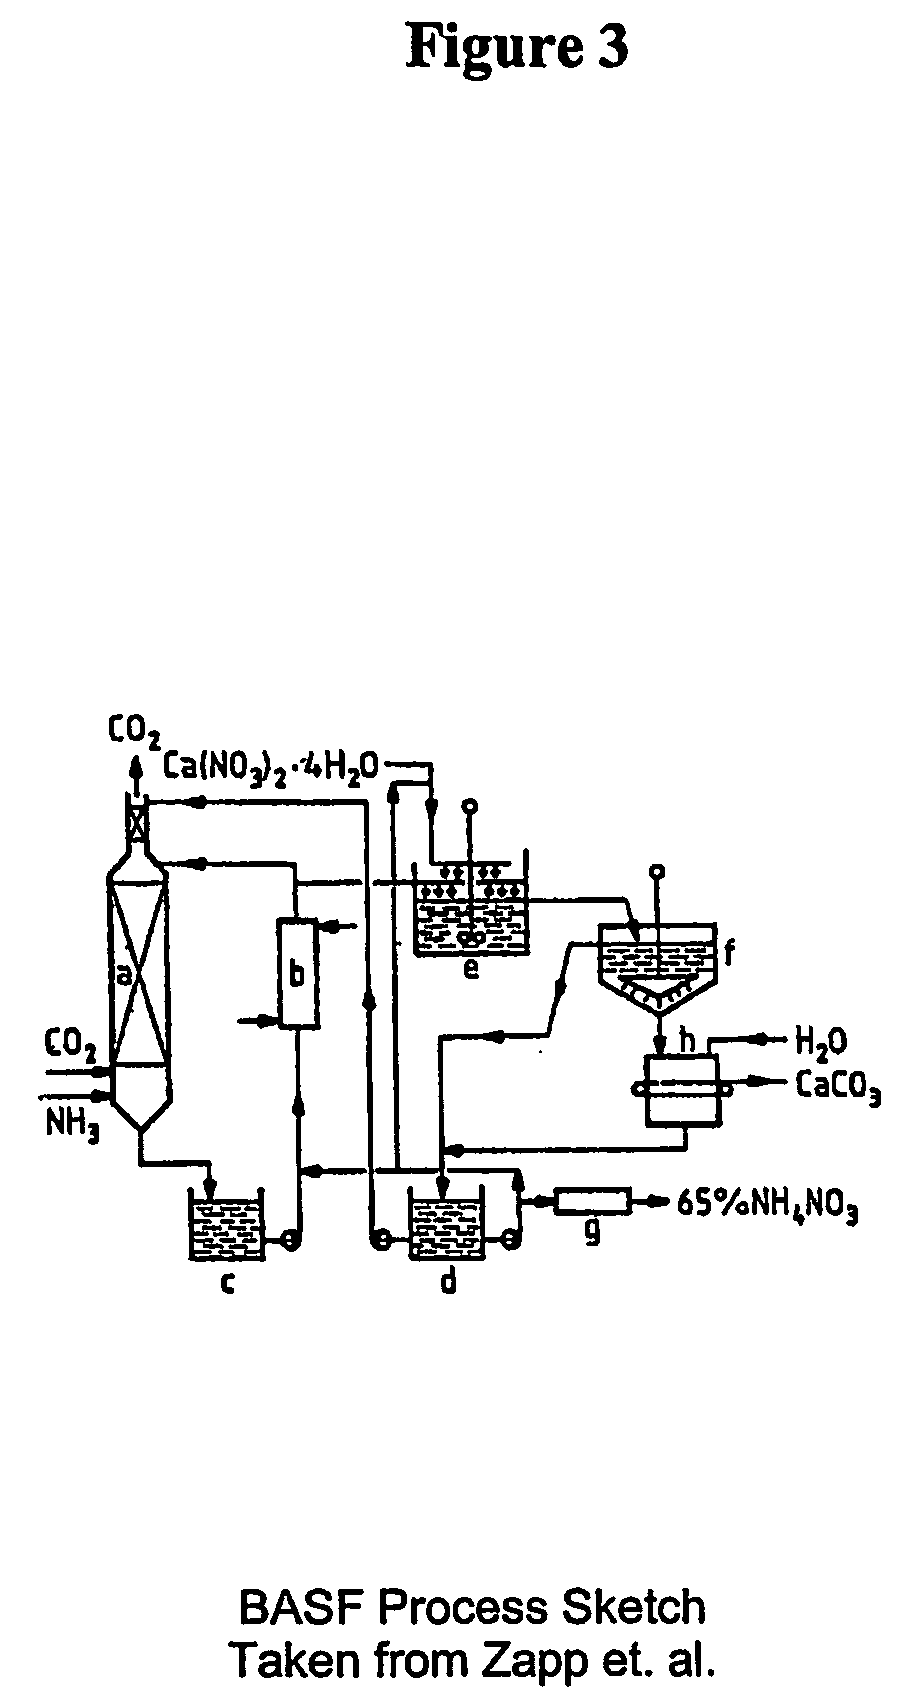 Production of organic acid and ammonium nitrate